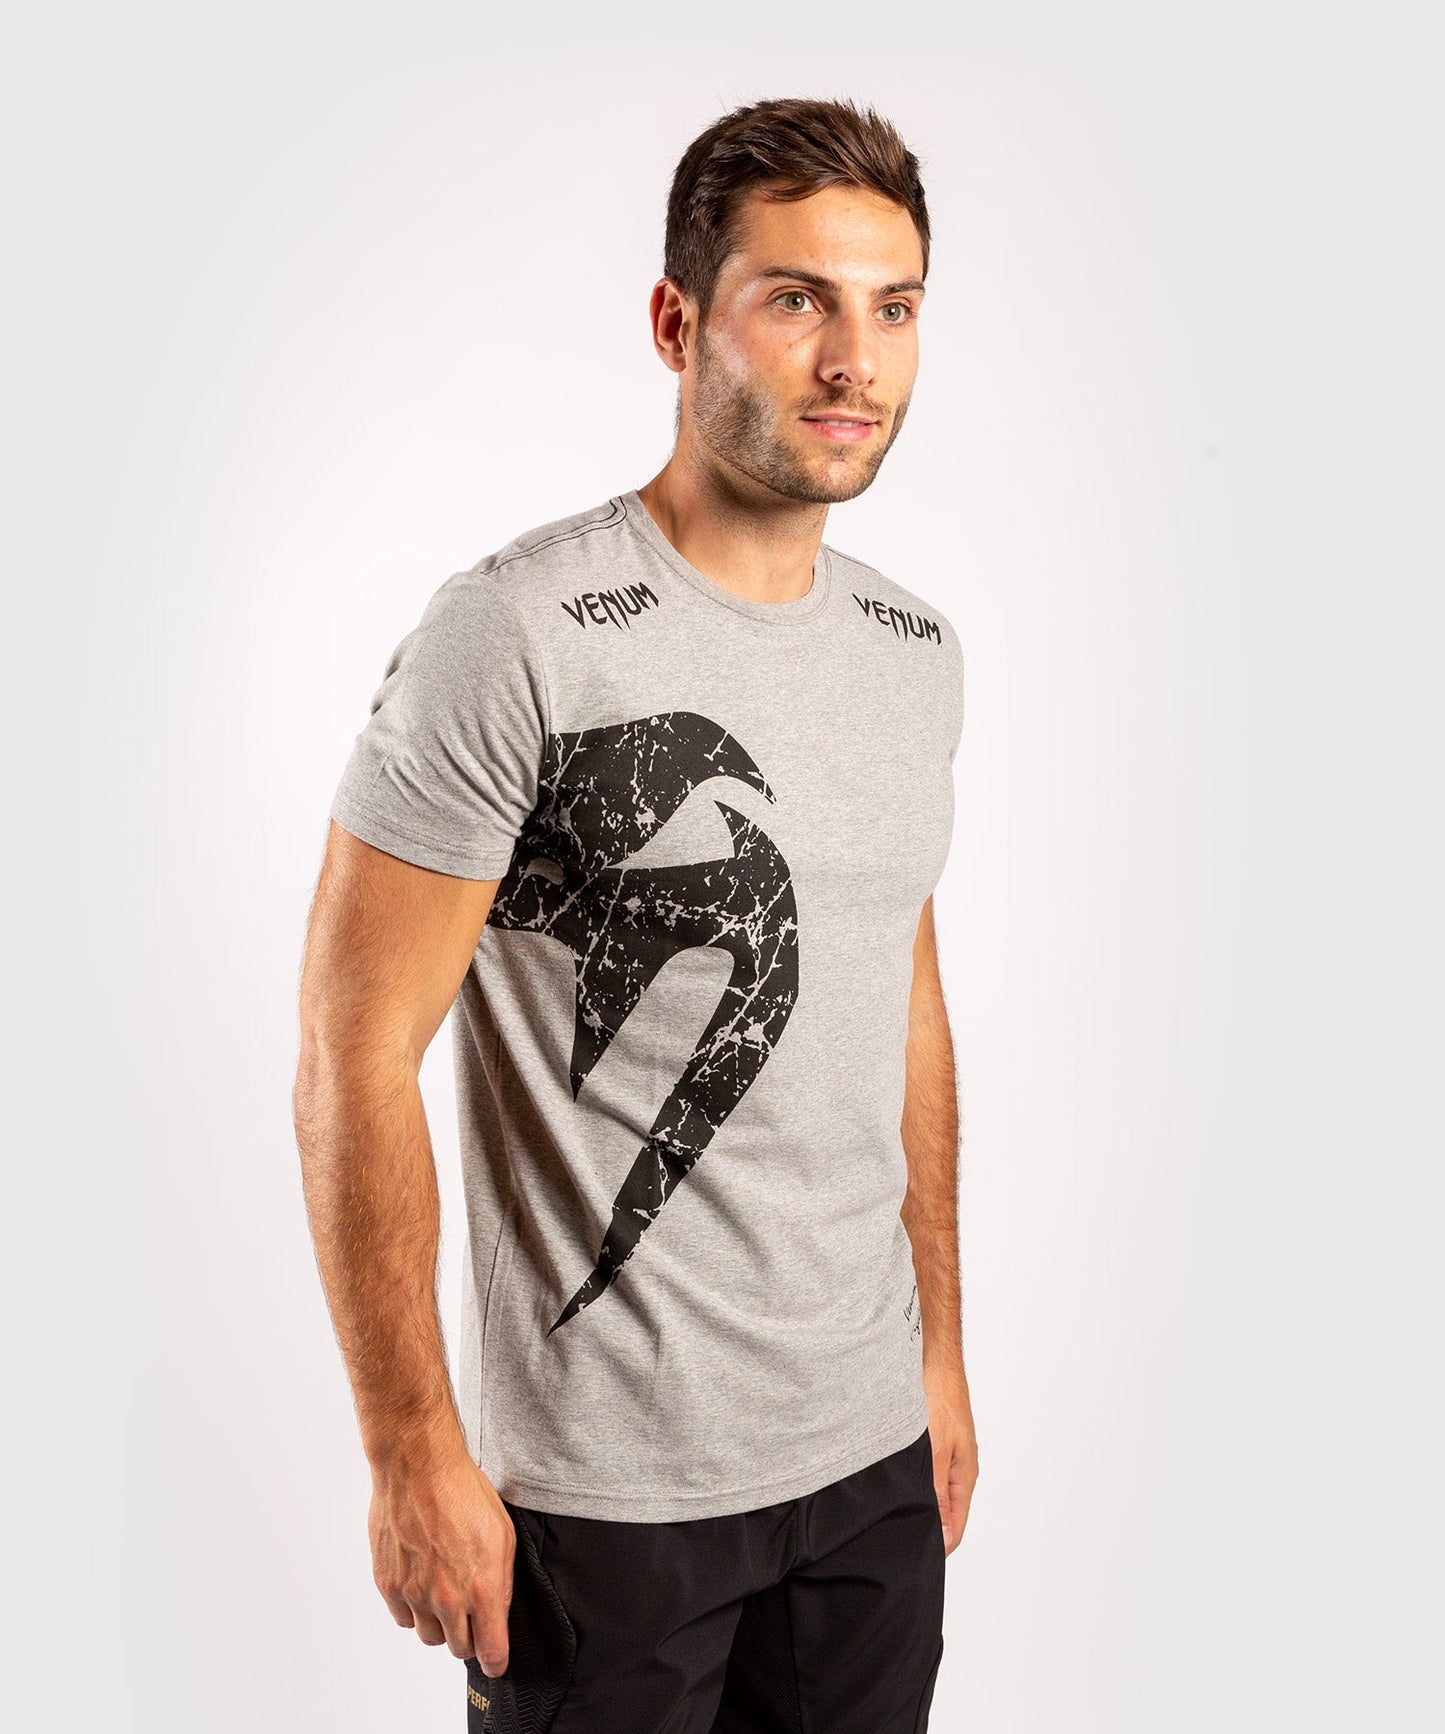 Venum Giant T-shirt - Grey/Black